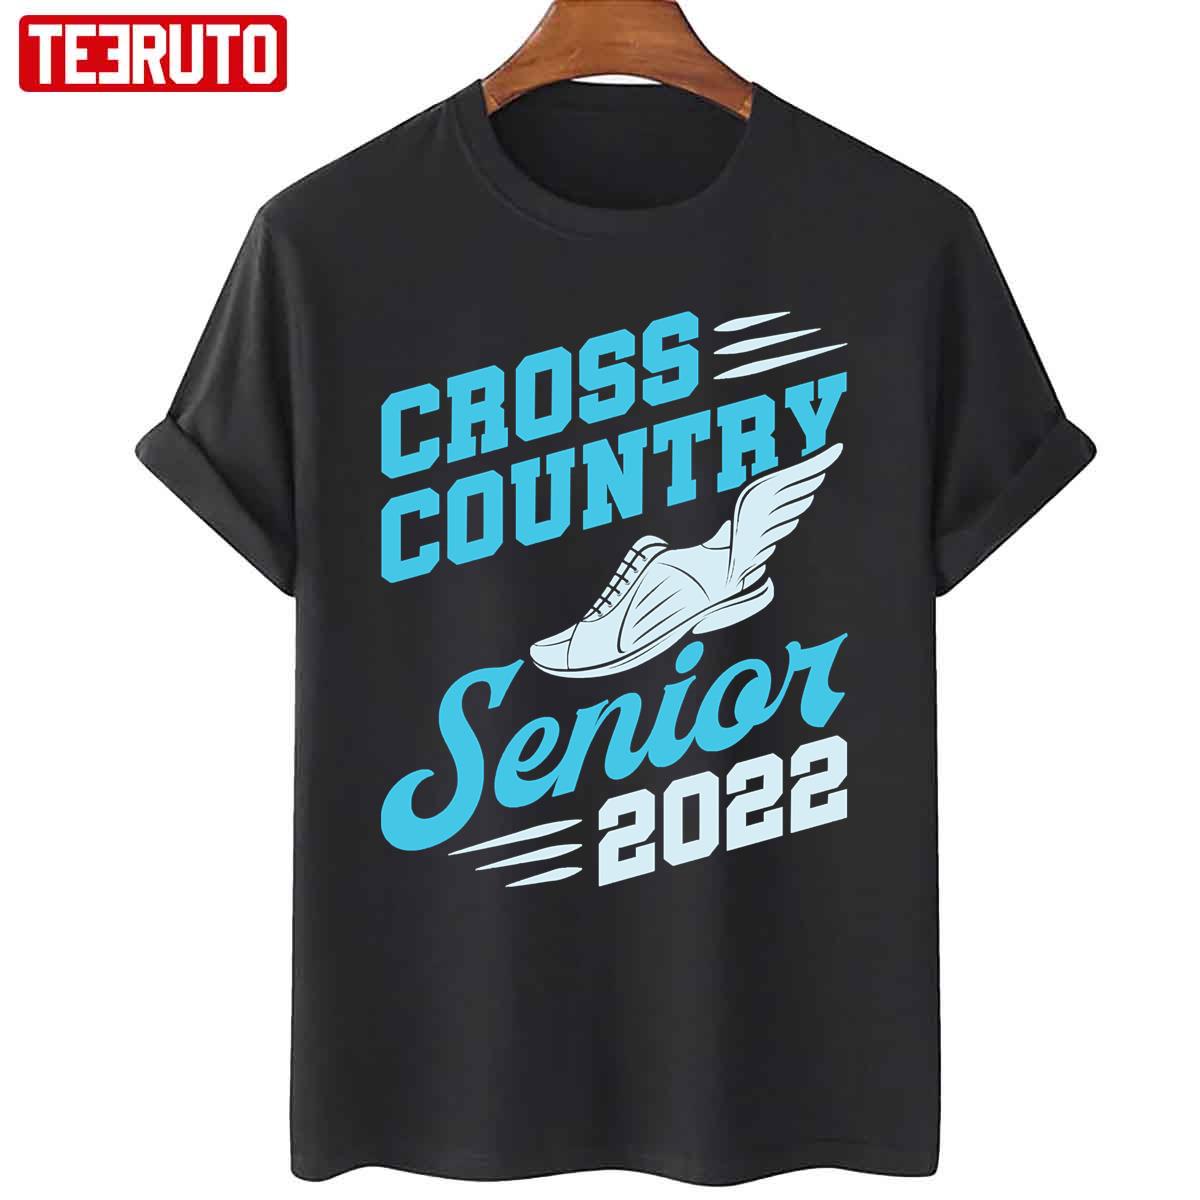 Cross Country Senior 2022 Unisex T-Shirt